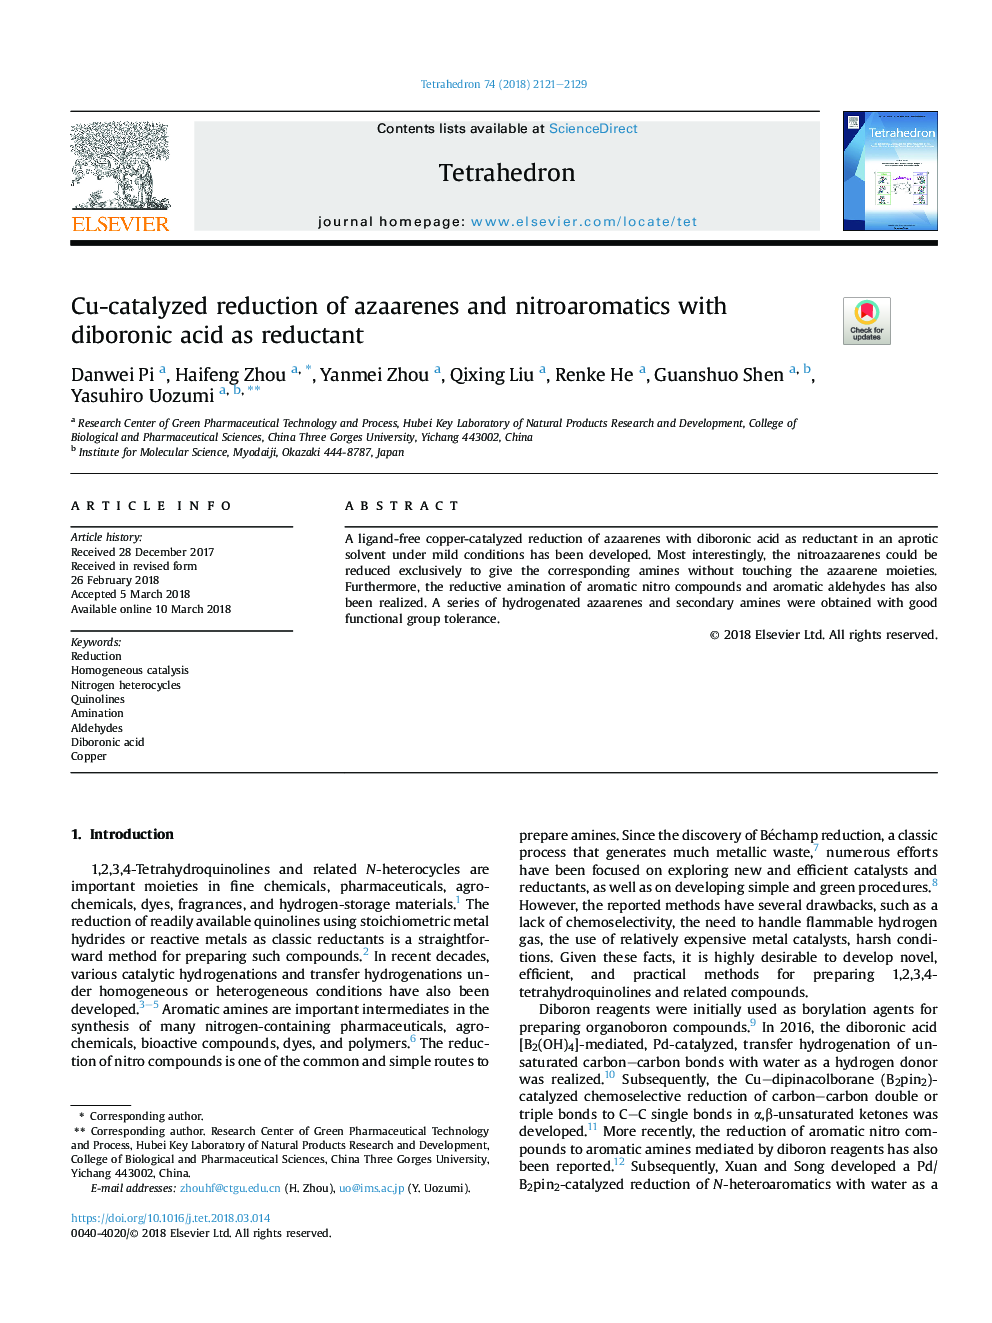 Cu-catalyzed reduction of azaarenes and nitroaromatics with diboronic acid as reductant